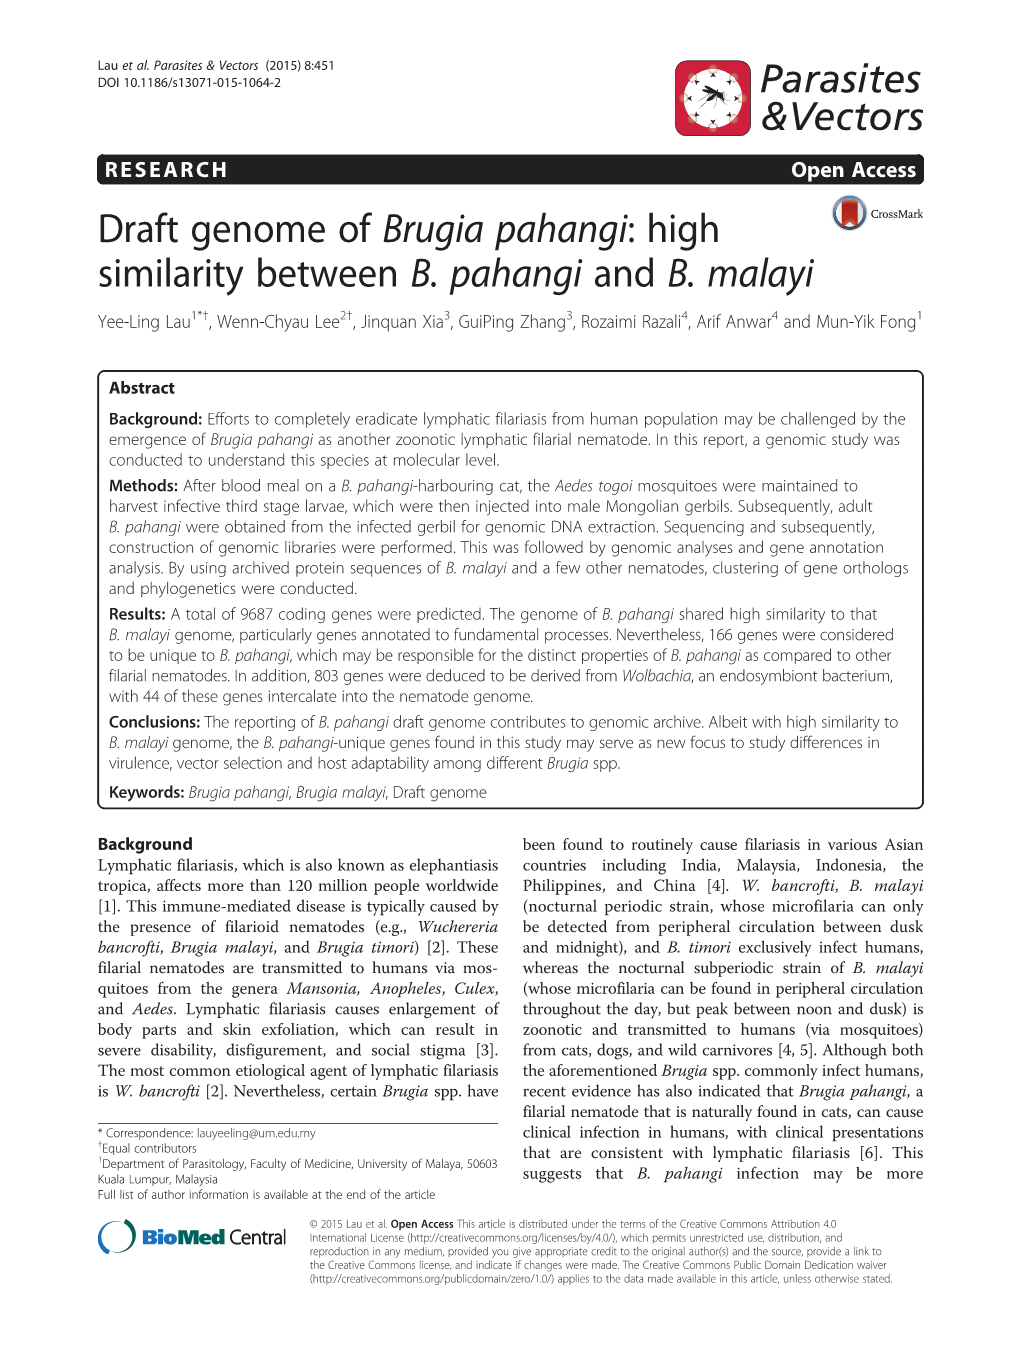 Draft Genome of Brugia Pahangi: High Similarity Between B